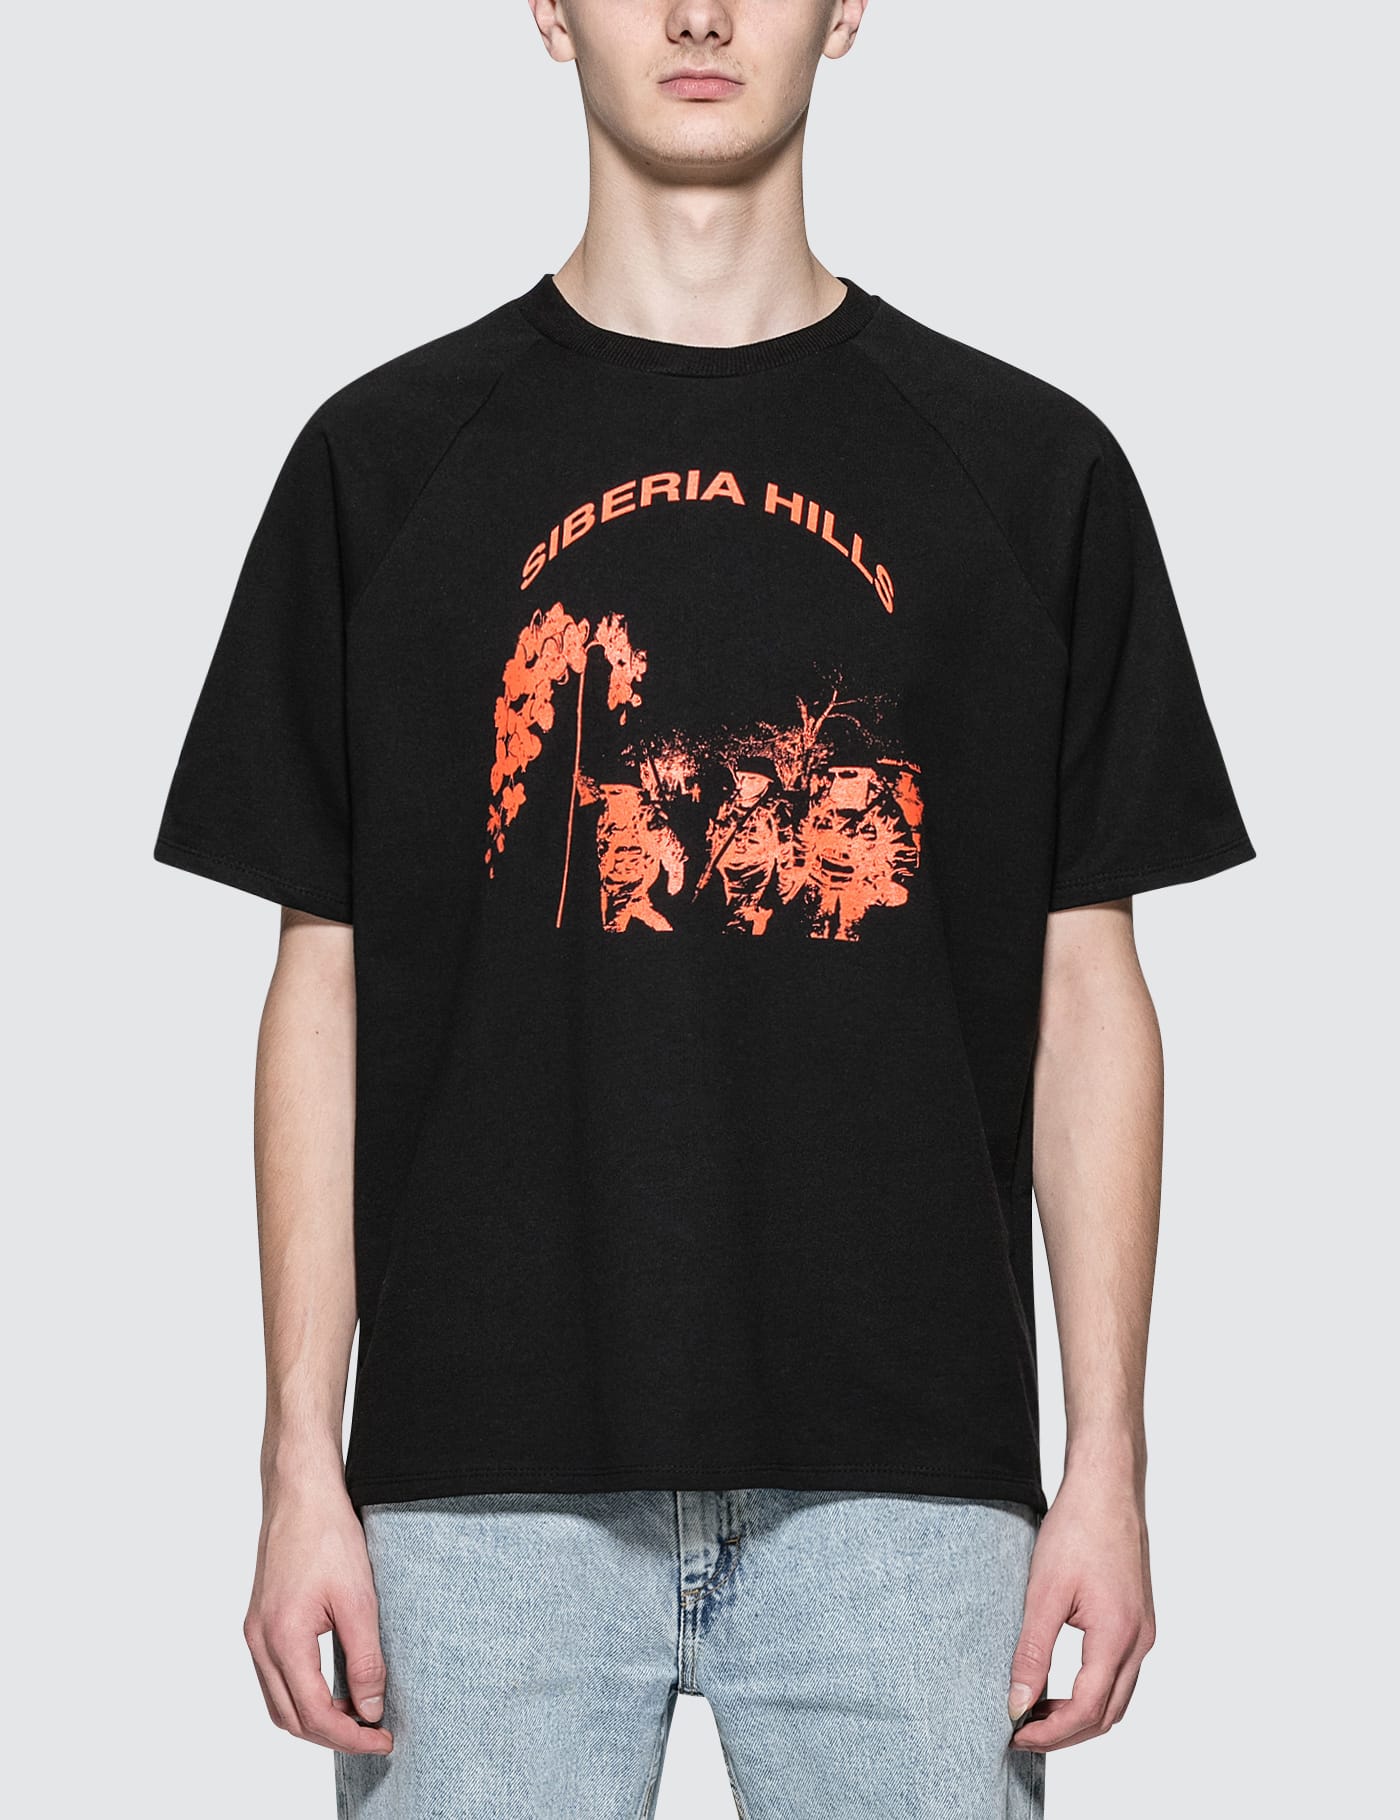 Siberia Hills - Raglan S/S T-Shirt | HBX - Globally Curated ...